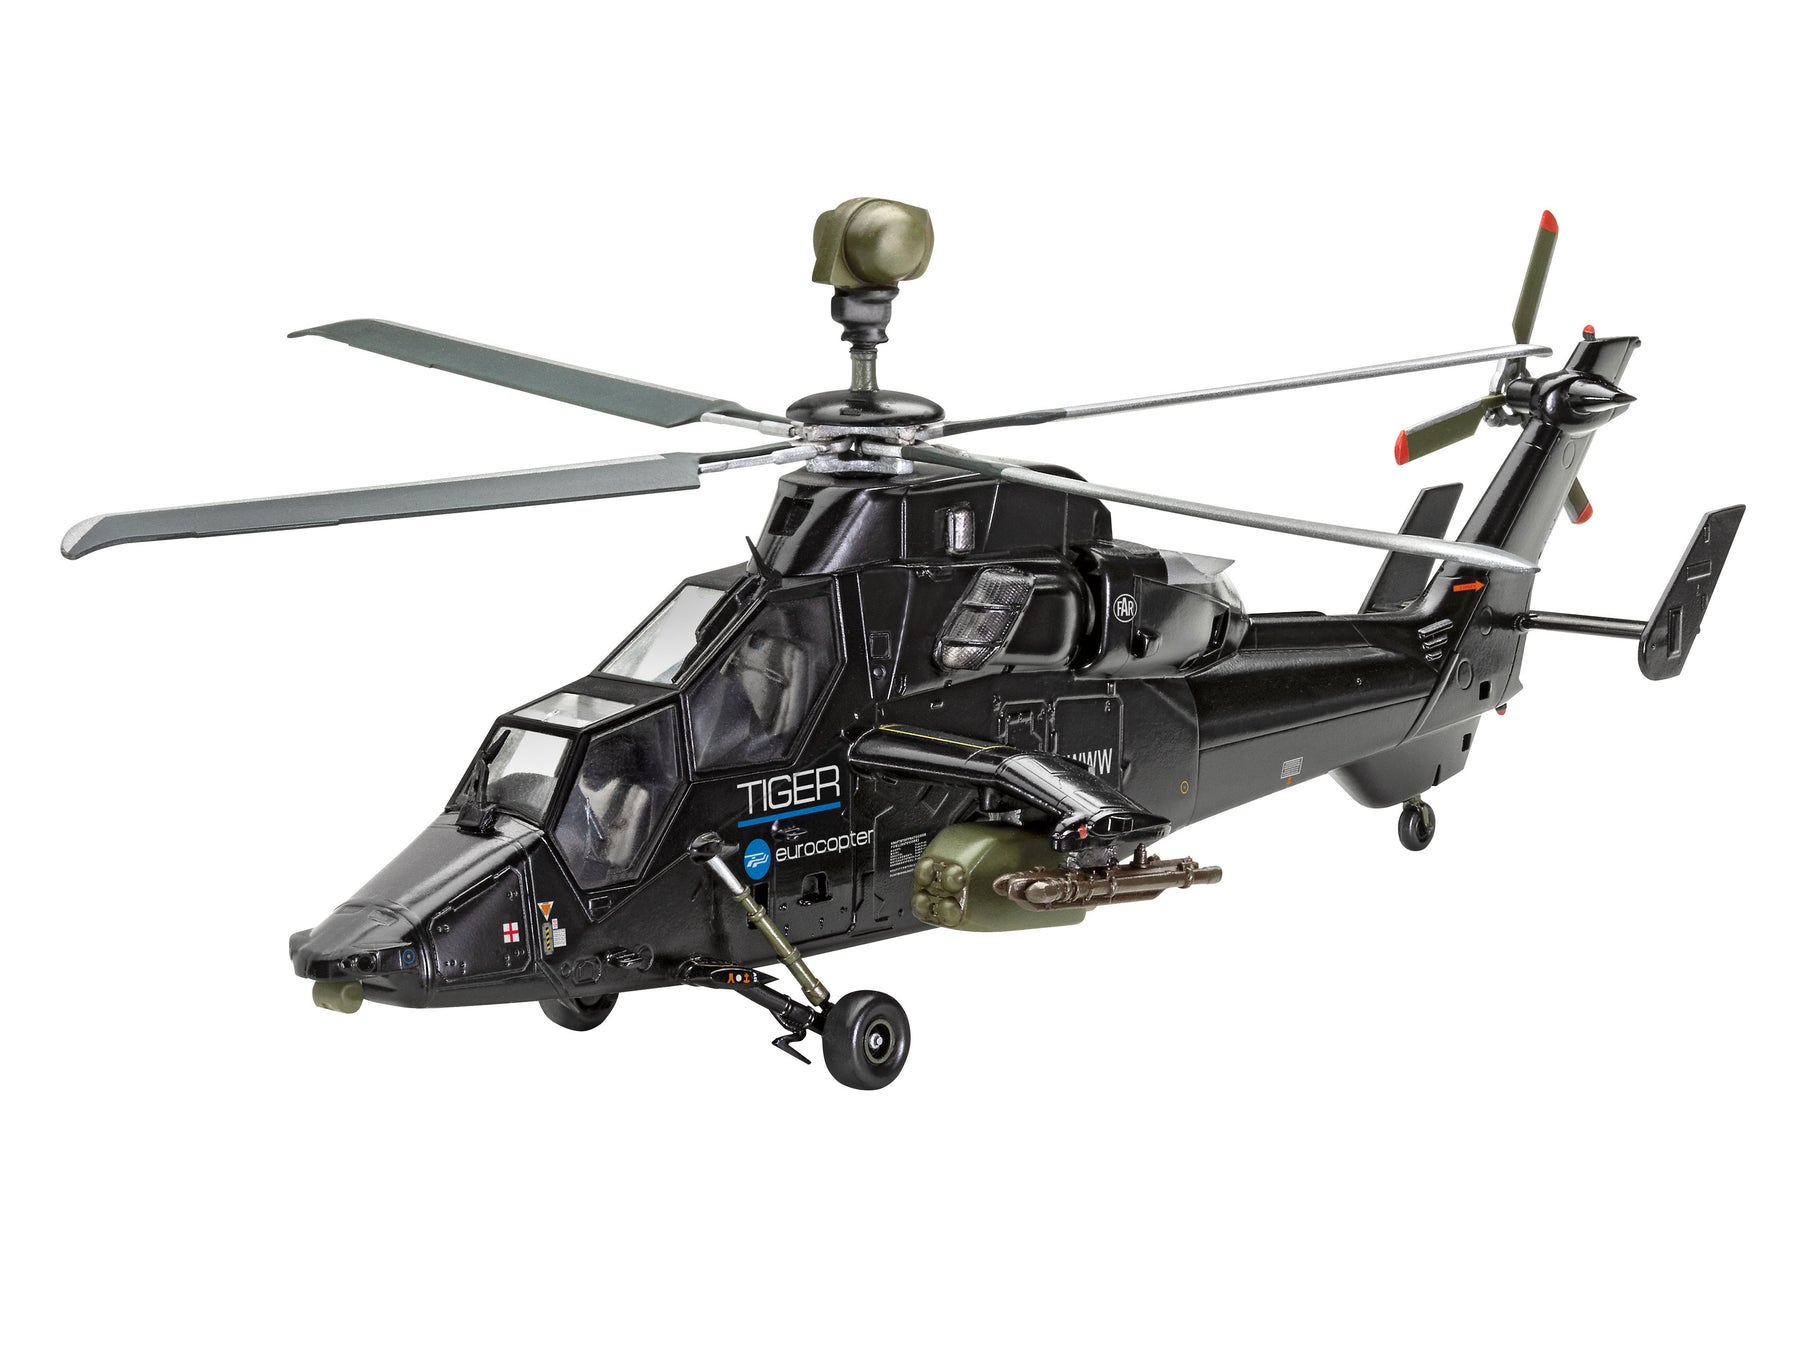 Eurocopter Tiger - James Bond 007 GoldenEye